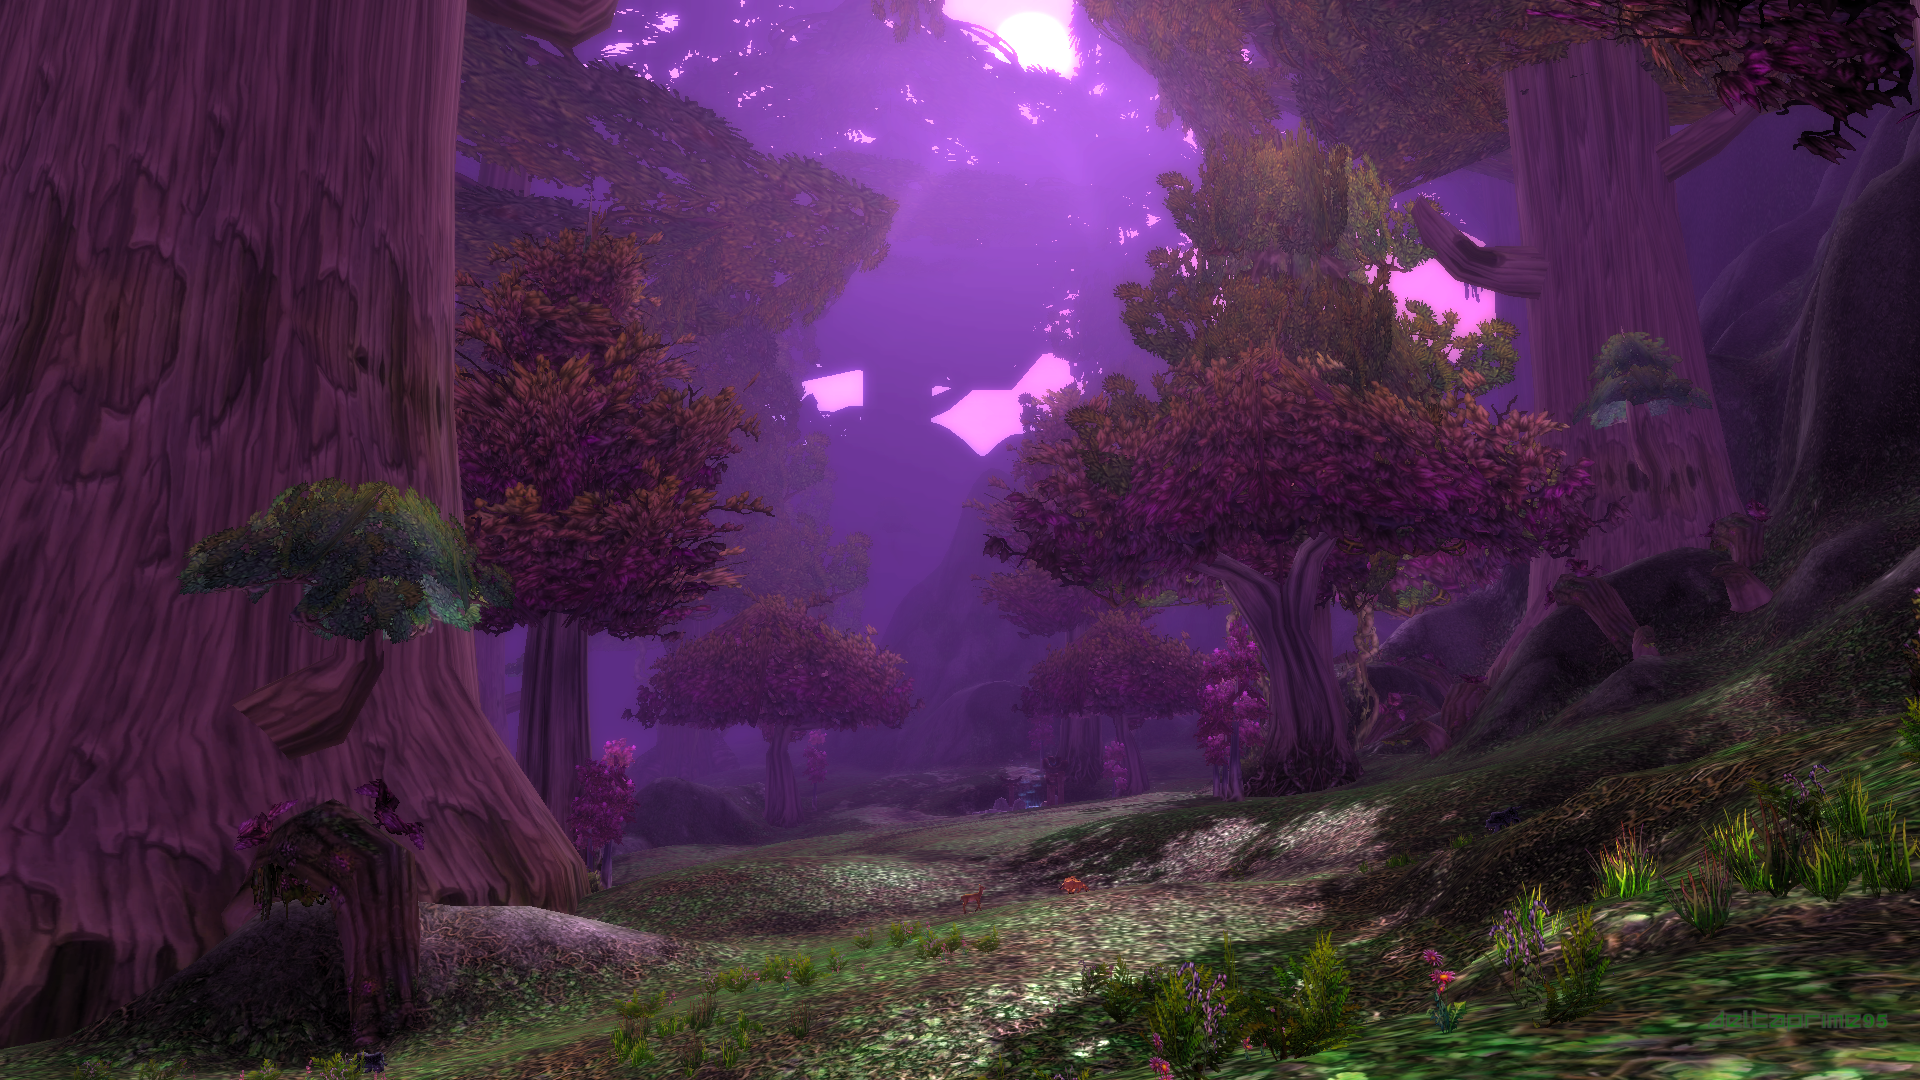 General 1920x1080 World of Warcraft Teldrassil Shadowglen night elves forest PC gaming screen shot